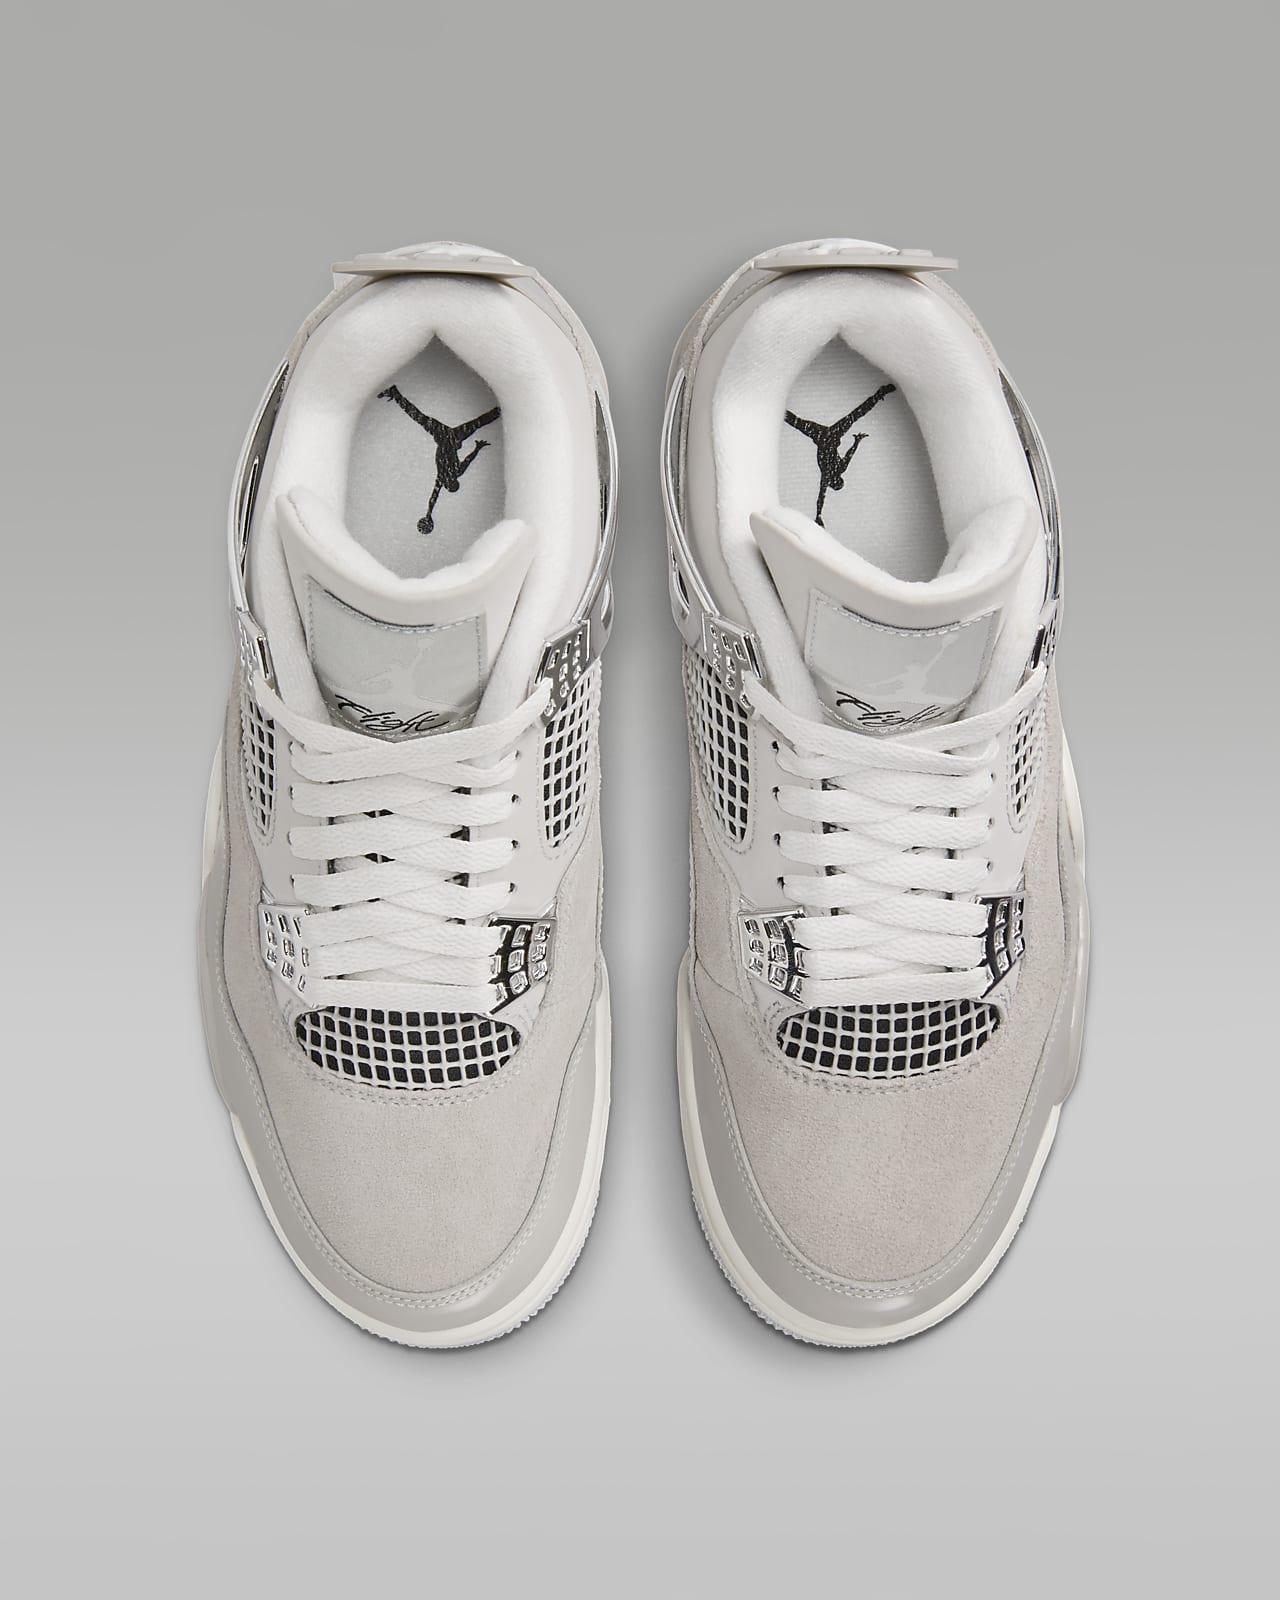 Jordan 4 louis vuitton bred bmj  Jordans, Air jordans, Nike shoes women